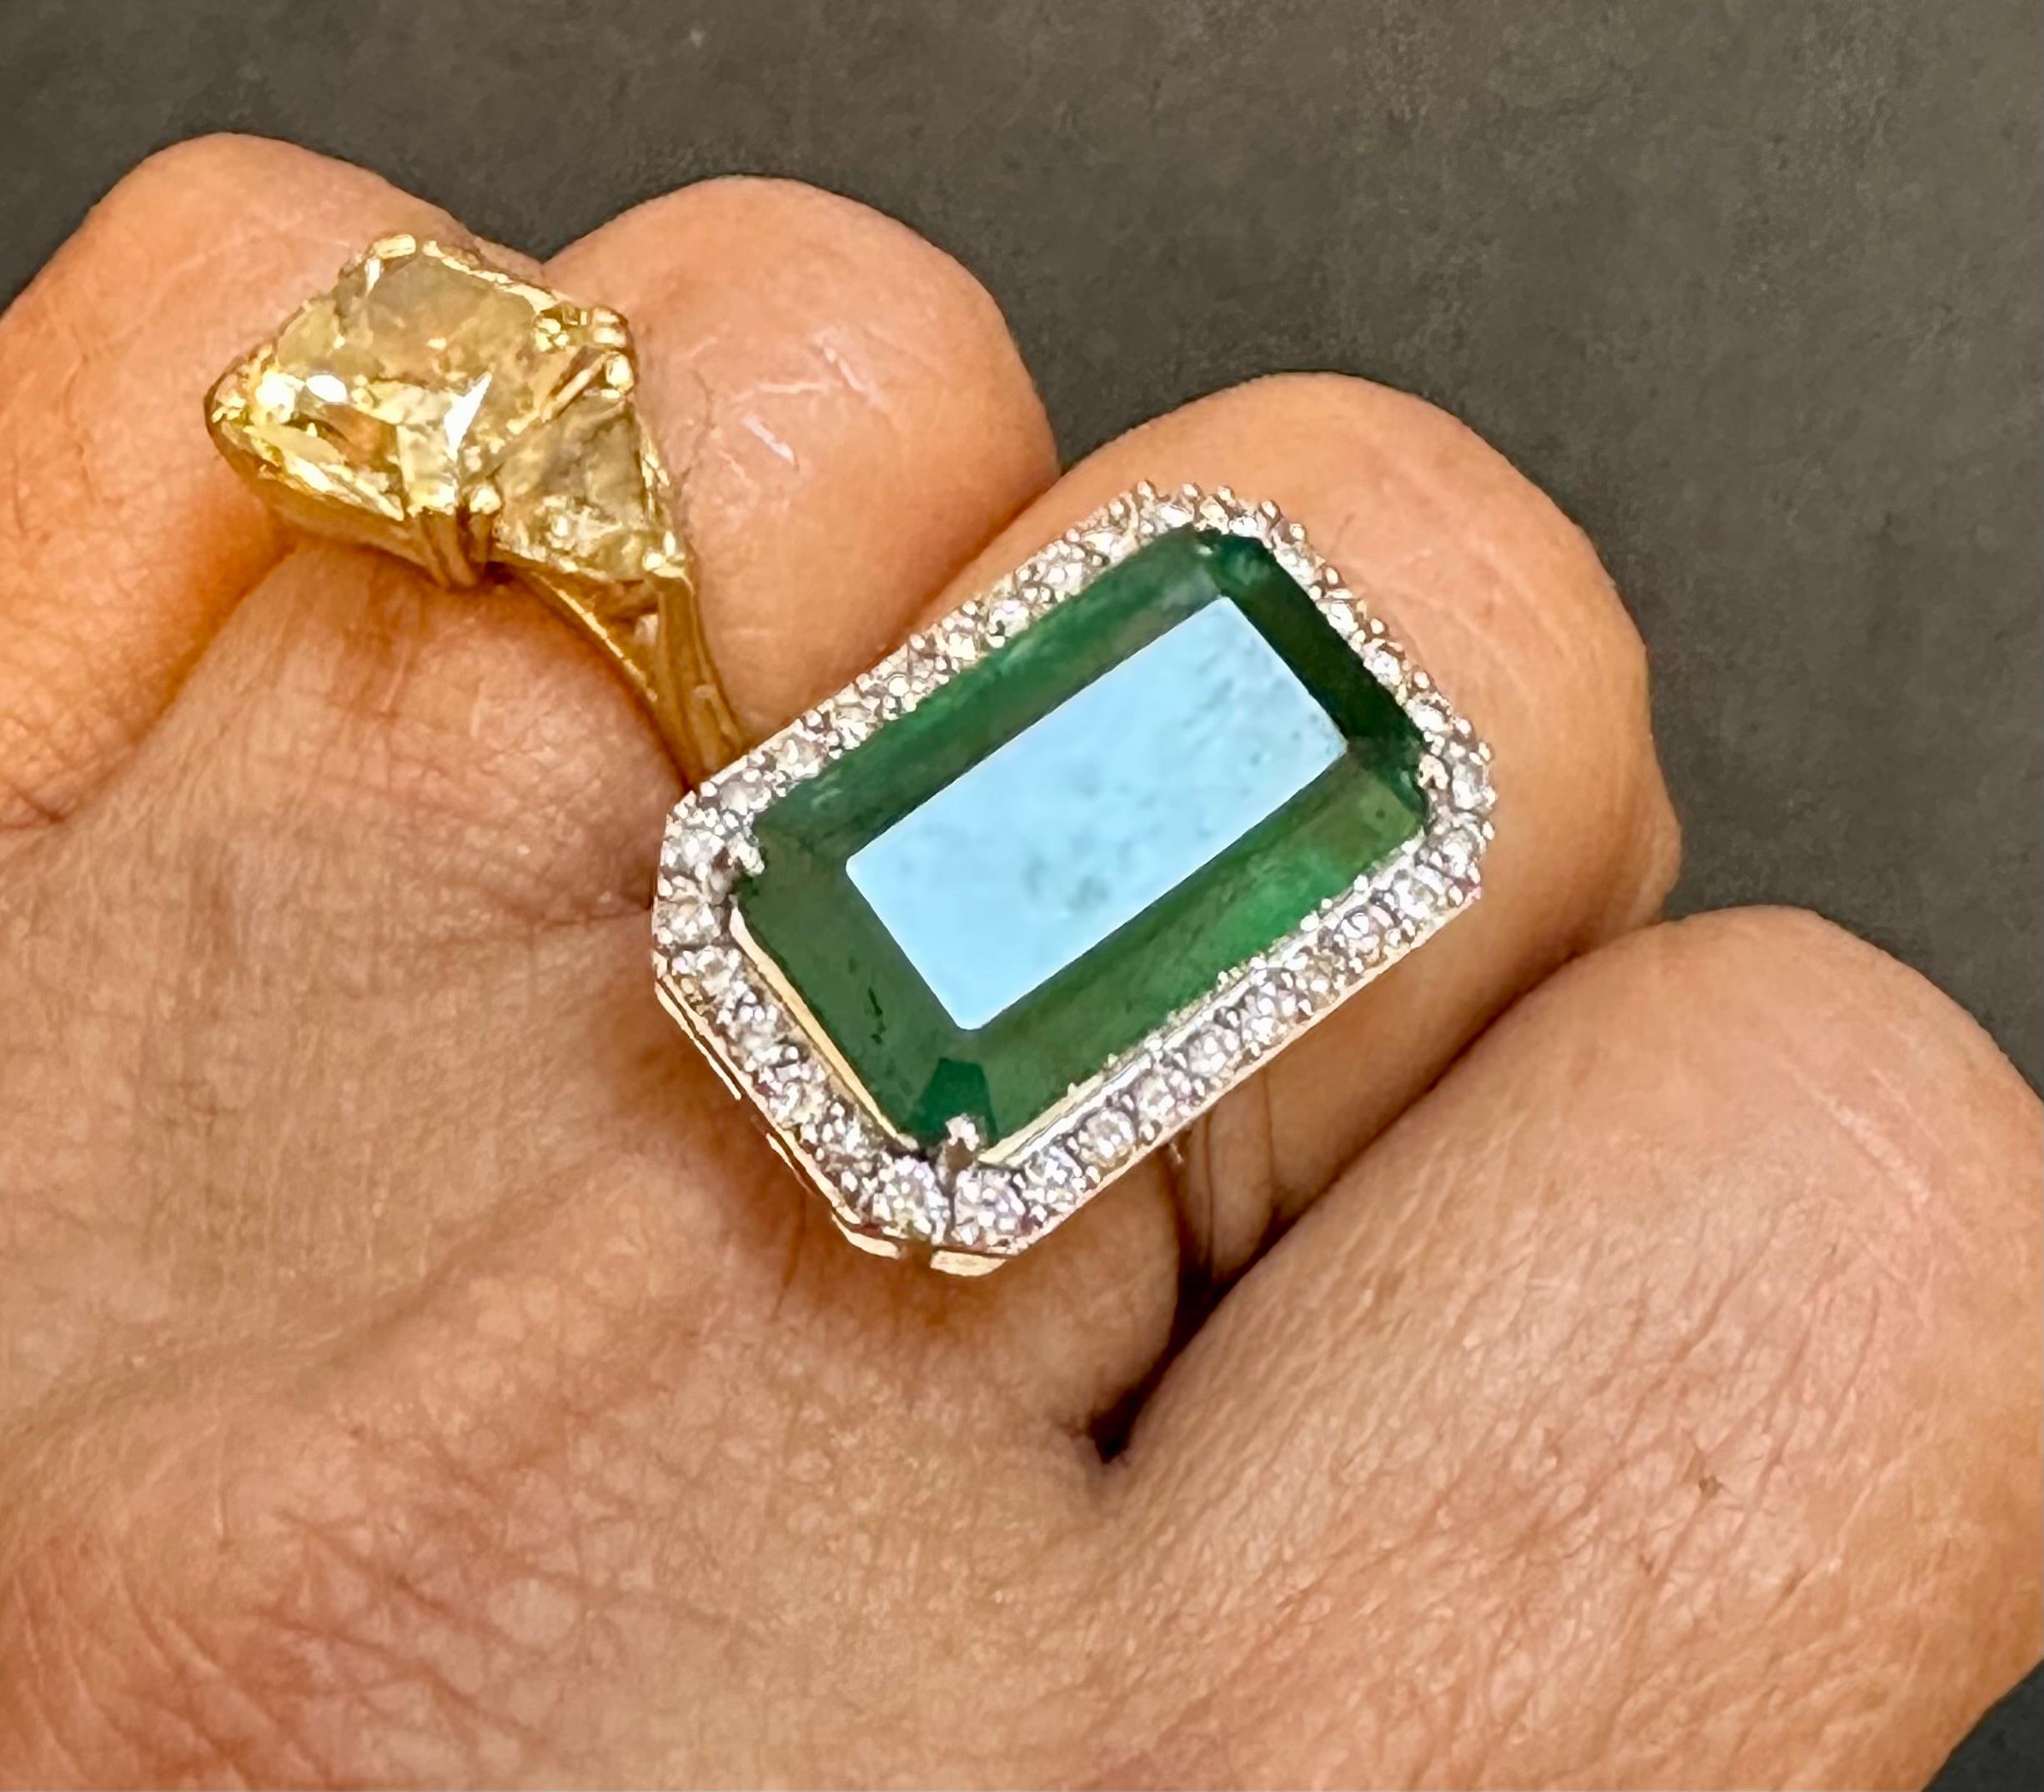 Natural 9 Carat Emerald Cut Zambian Emerald & Diamond Ring in 14 Kt White Gold 3